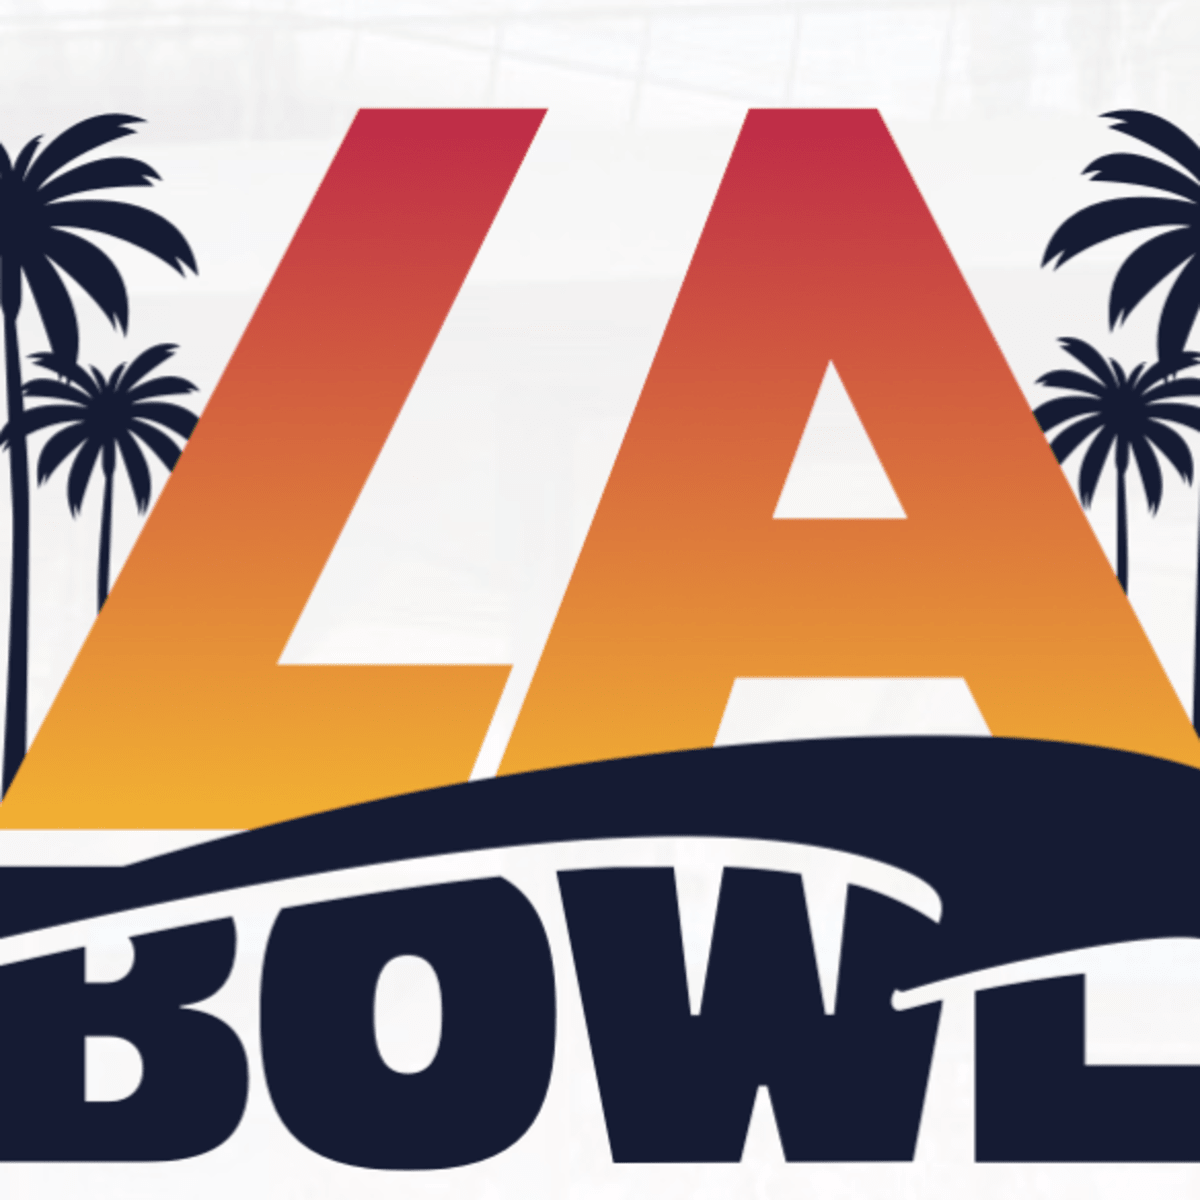 The LA Bowl